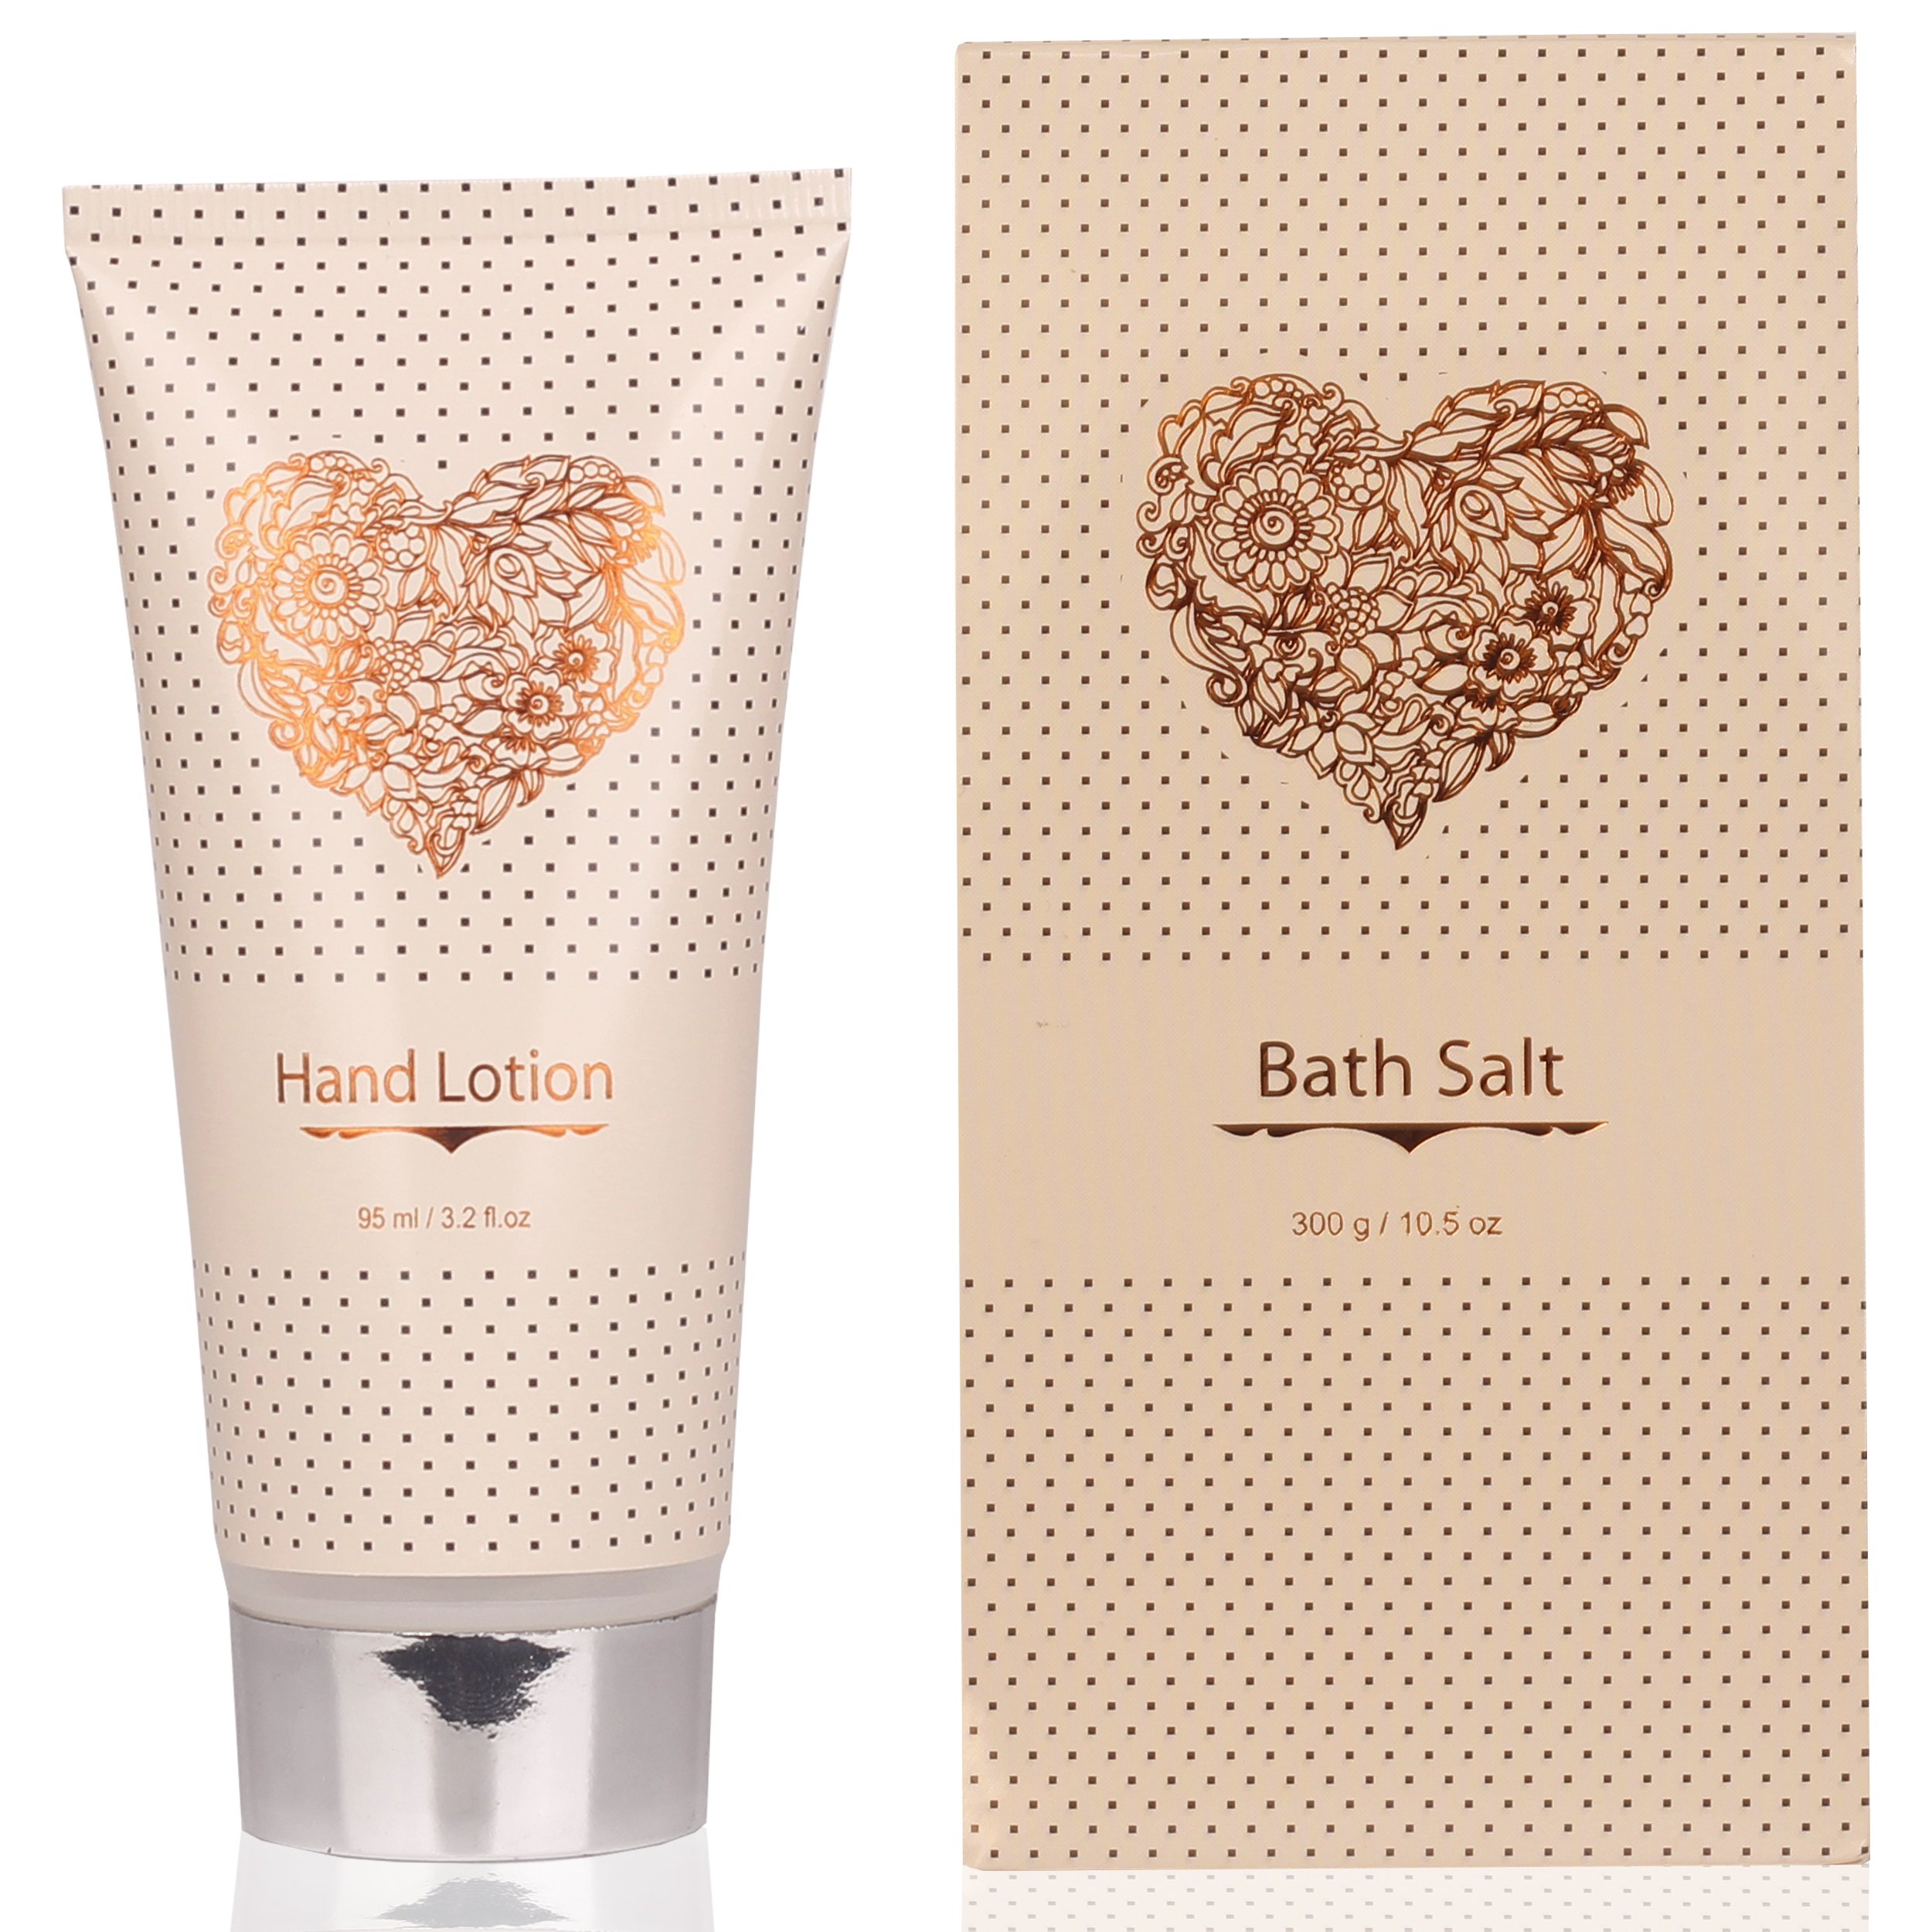 Spa Gift Basket – Bath and Body Set with Vanilla Fragrance by Lovestee - Bath Gift Basket Includes Shower Gel, Body Lotion, Hand Lotion, Bath Salt, Eva Sponge and a Bath Puff